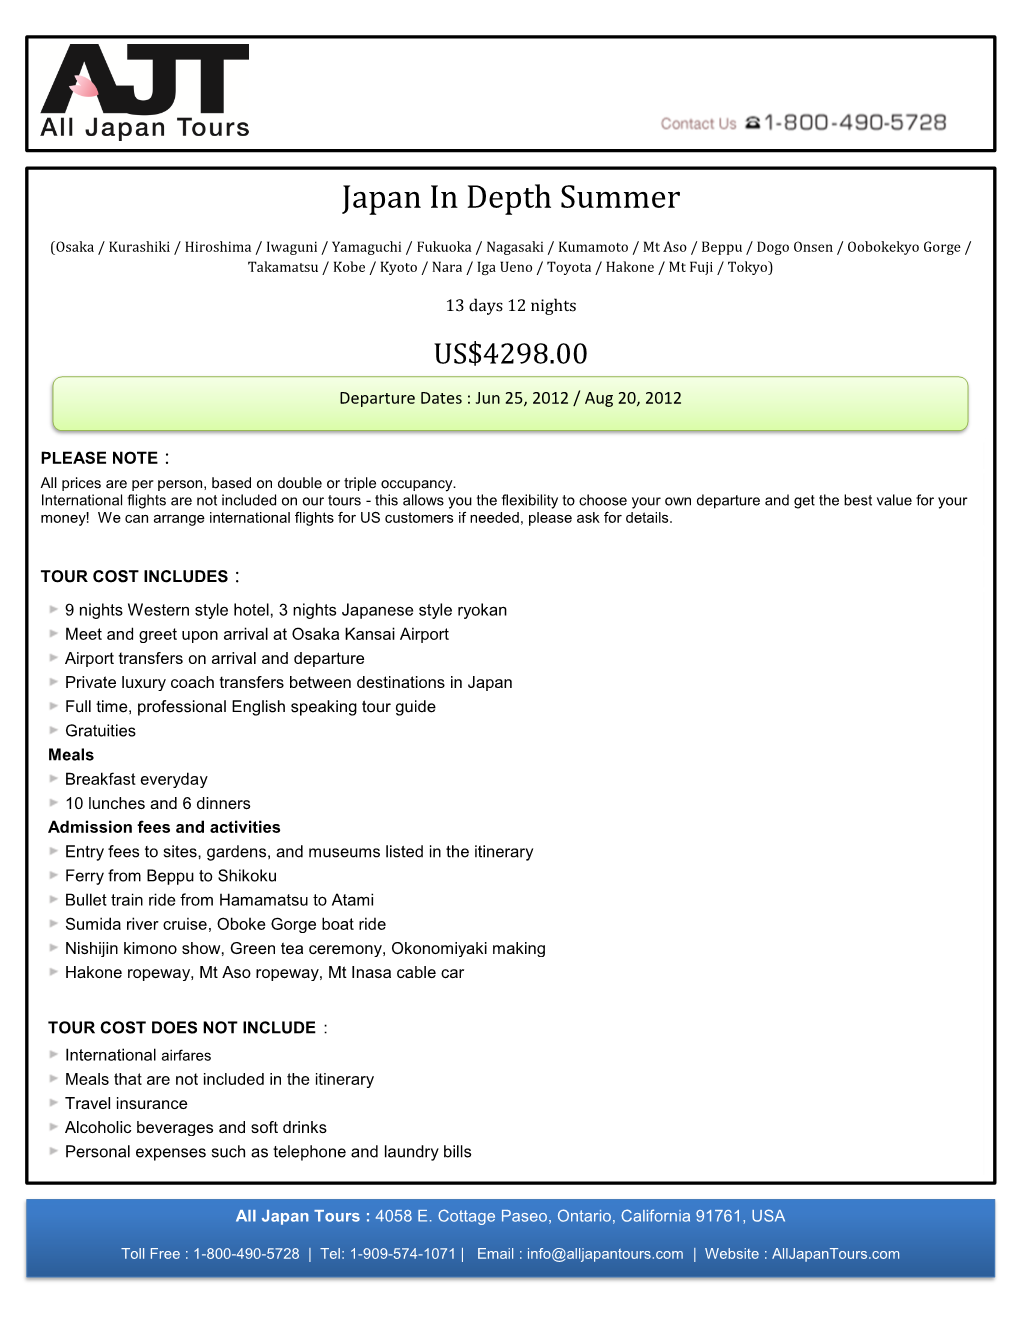 Japan in Depth Summer